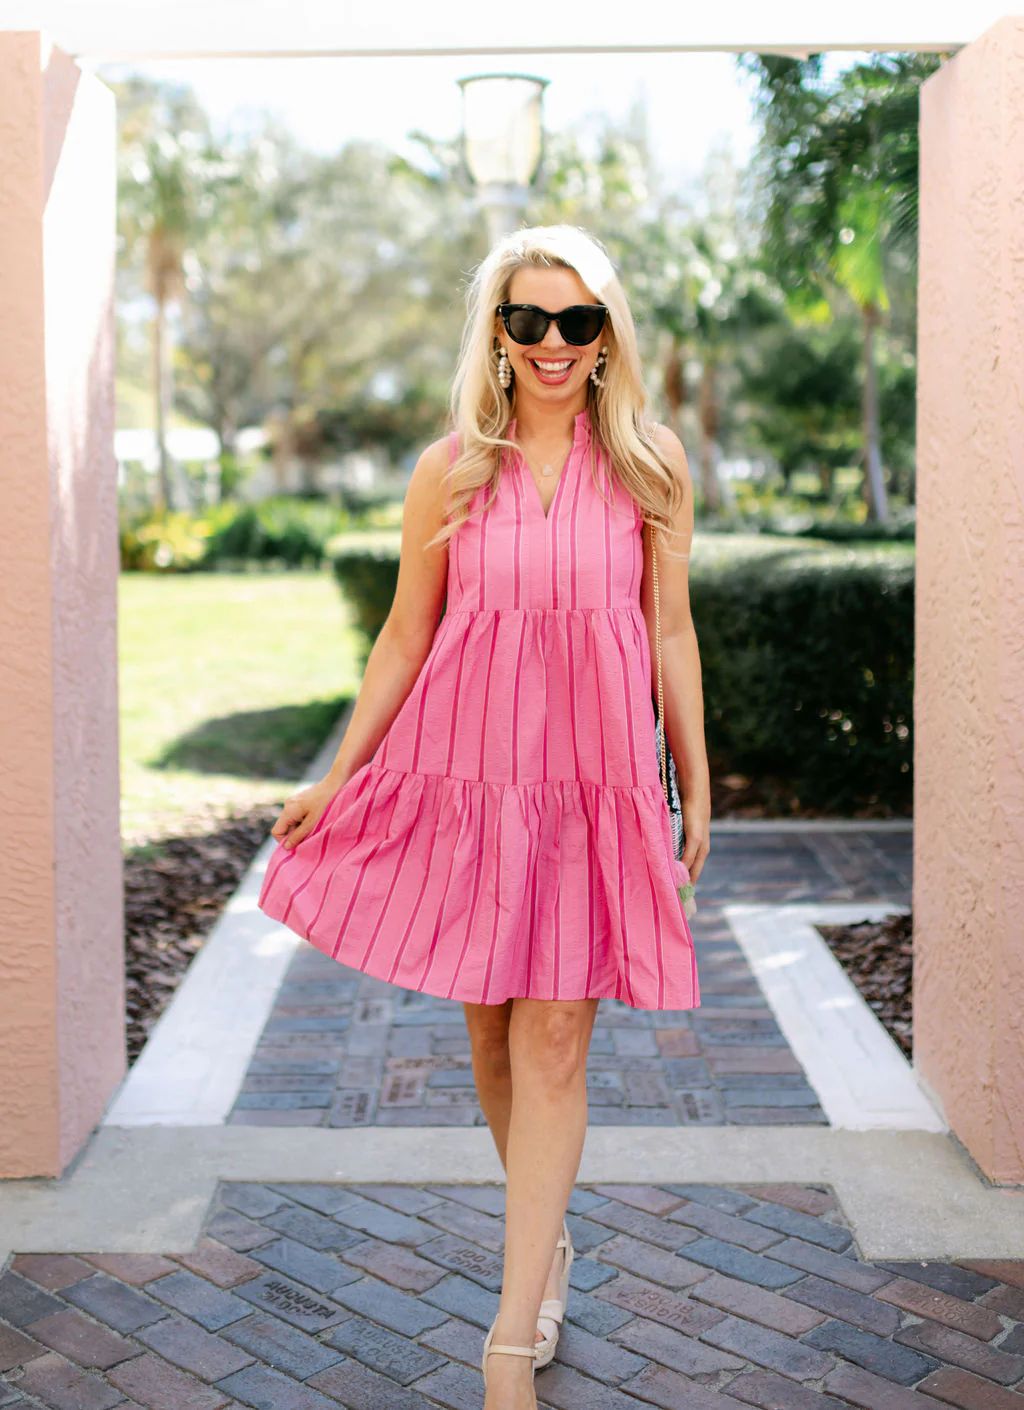 The Annika Dress in Candy Pink Seersucker | Duffield Lane